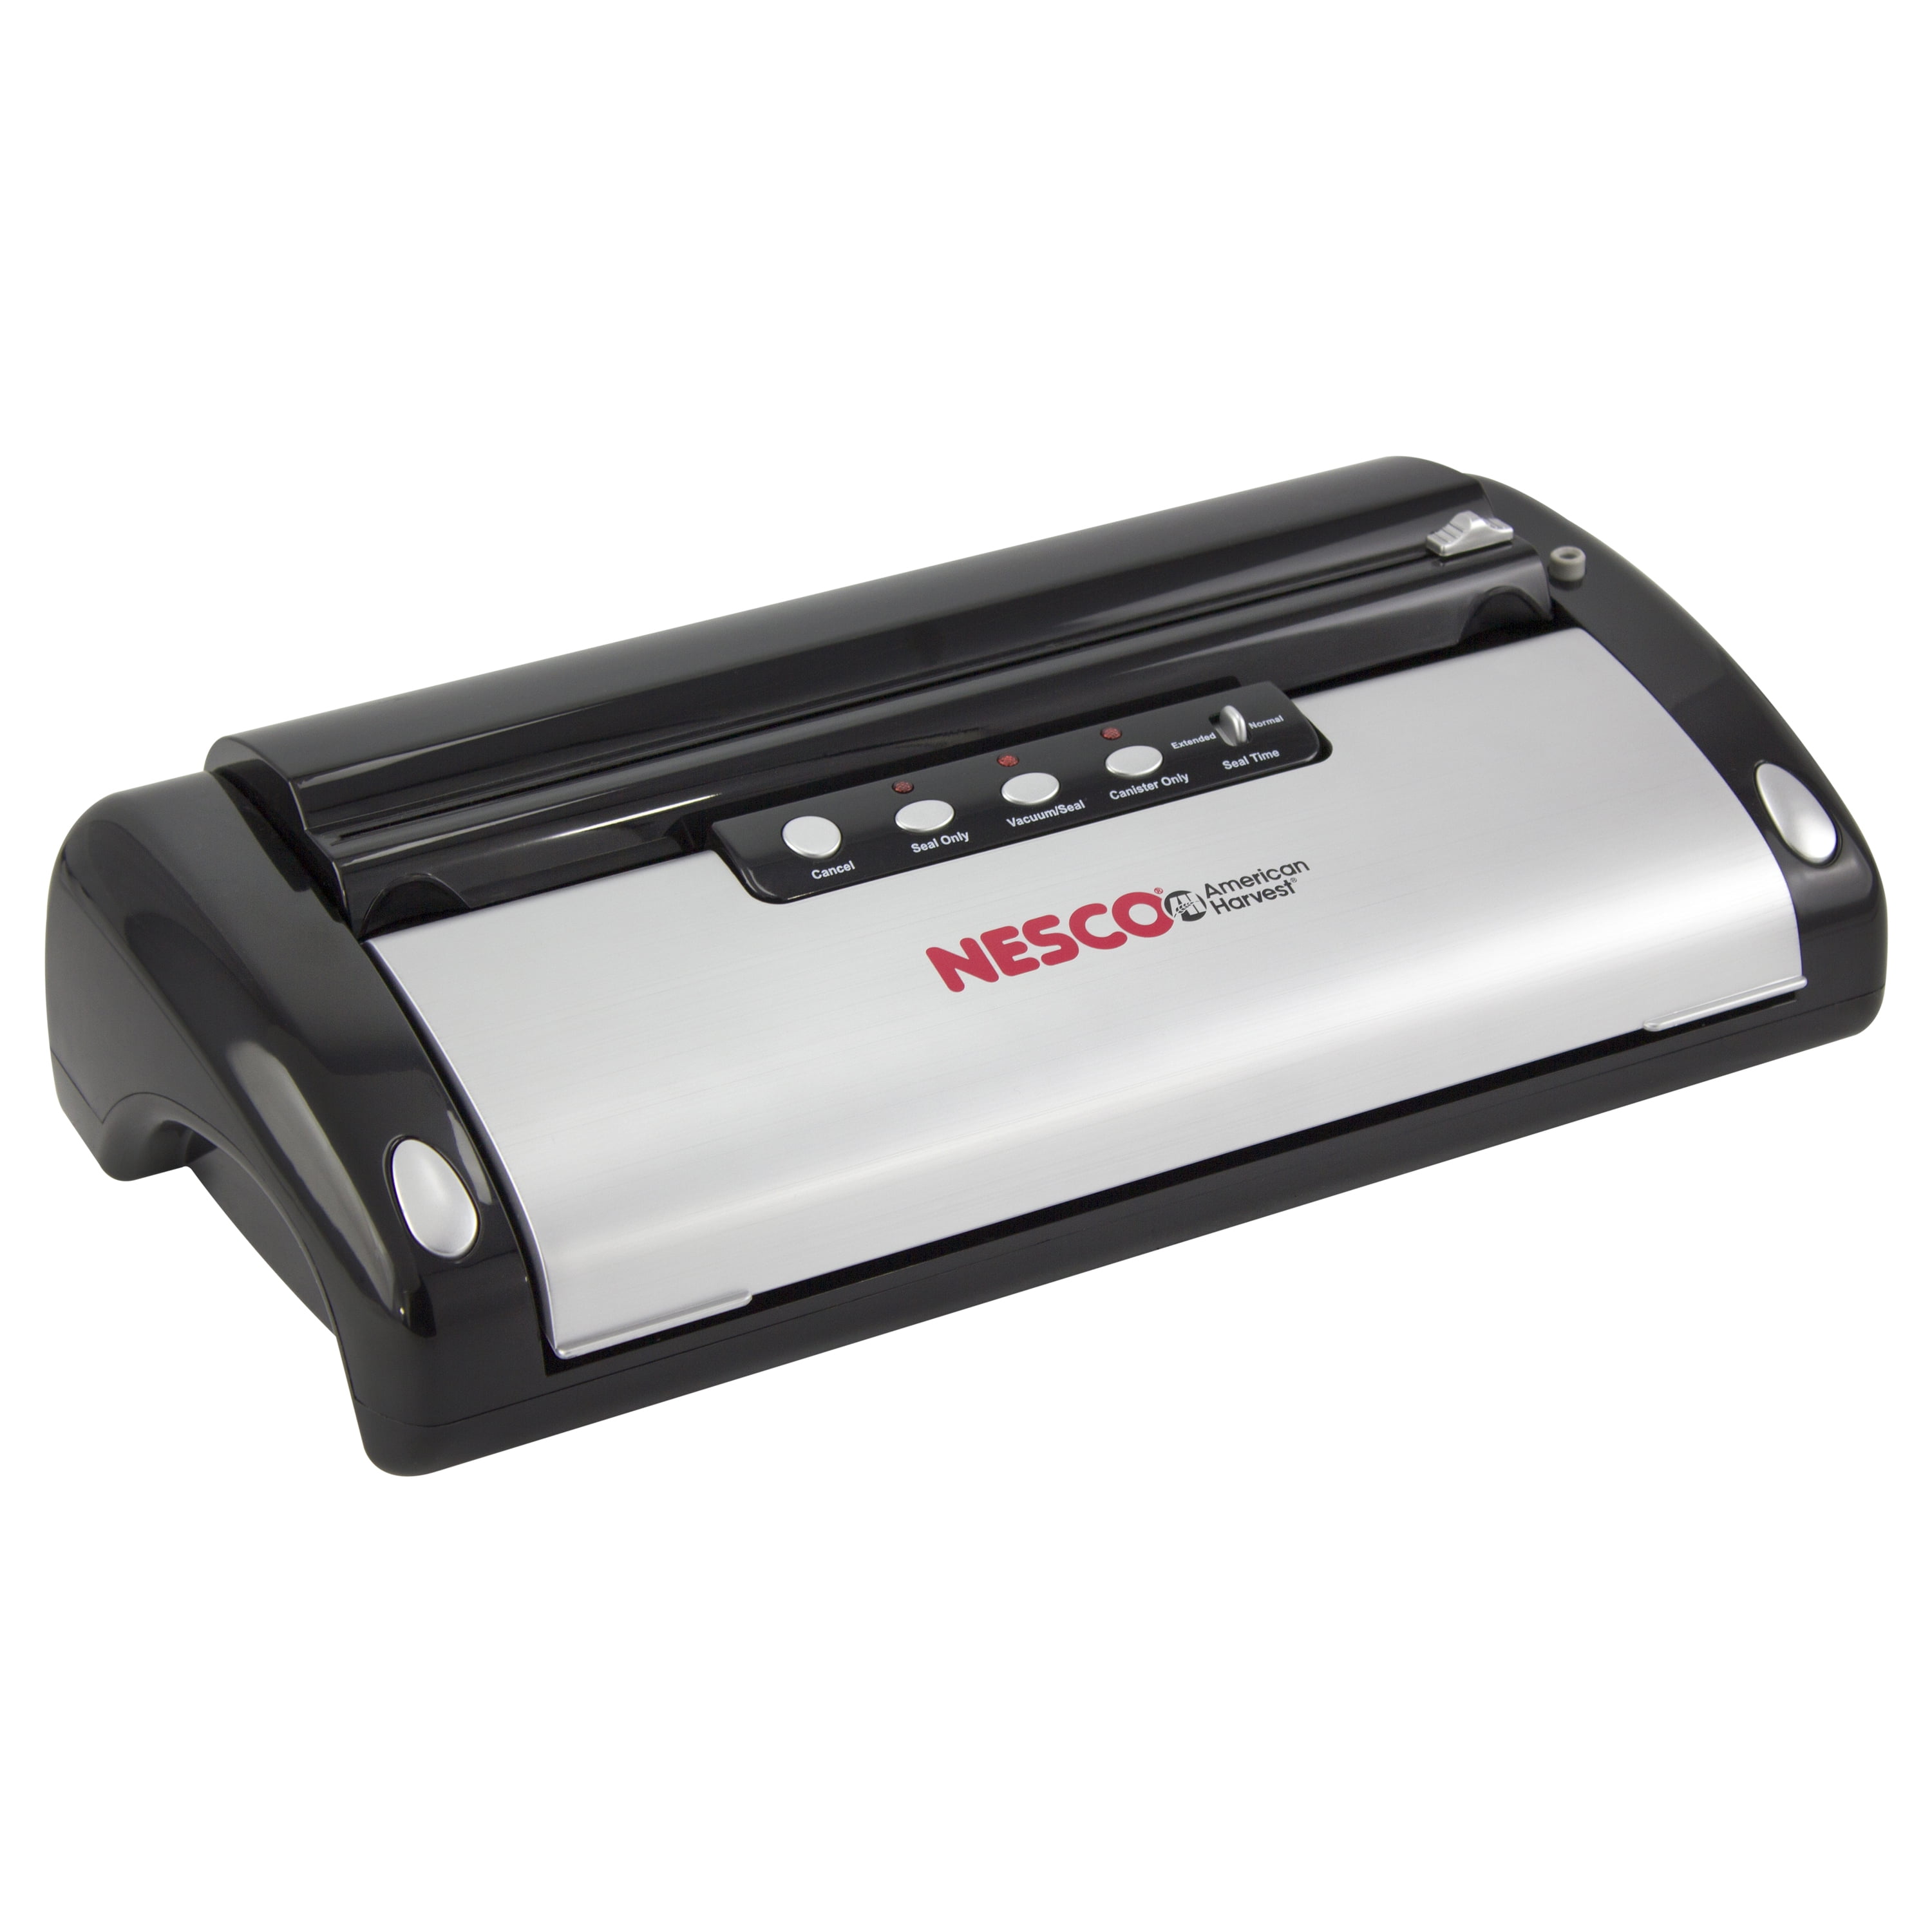 Nesco Deluxe Vacuum Sealer VS-12 for Sale in Henderson, NV - OfferUp